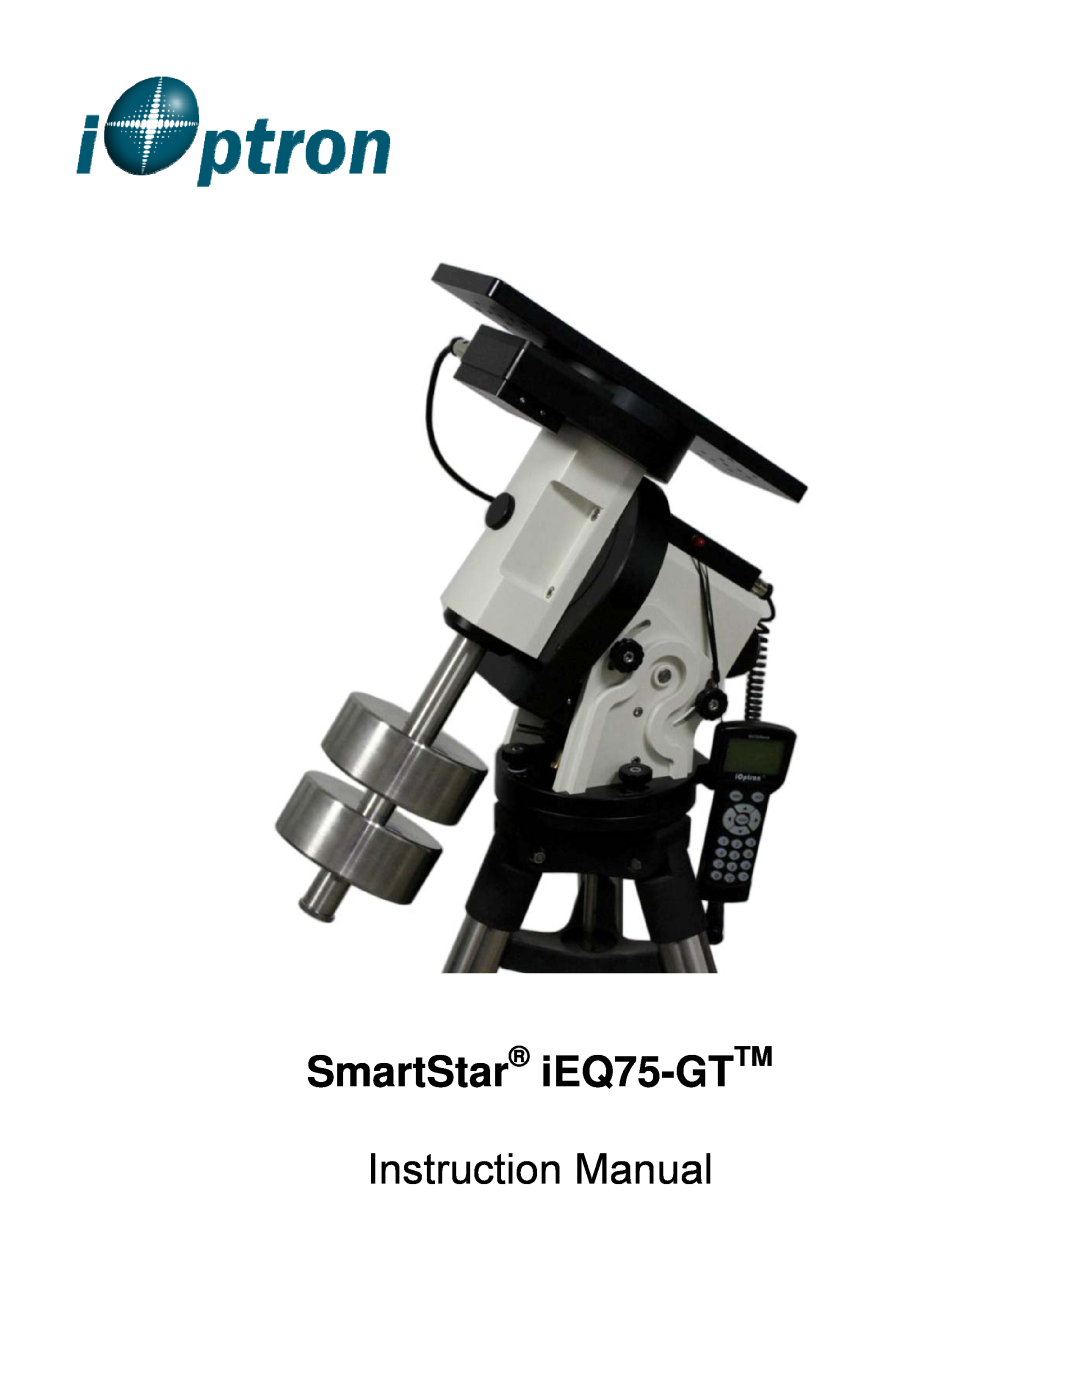 iOptron IEQ75-GTTM instruction manual SmartStar iEQ75-GTTM 